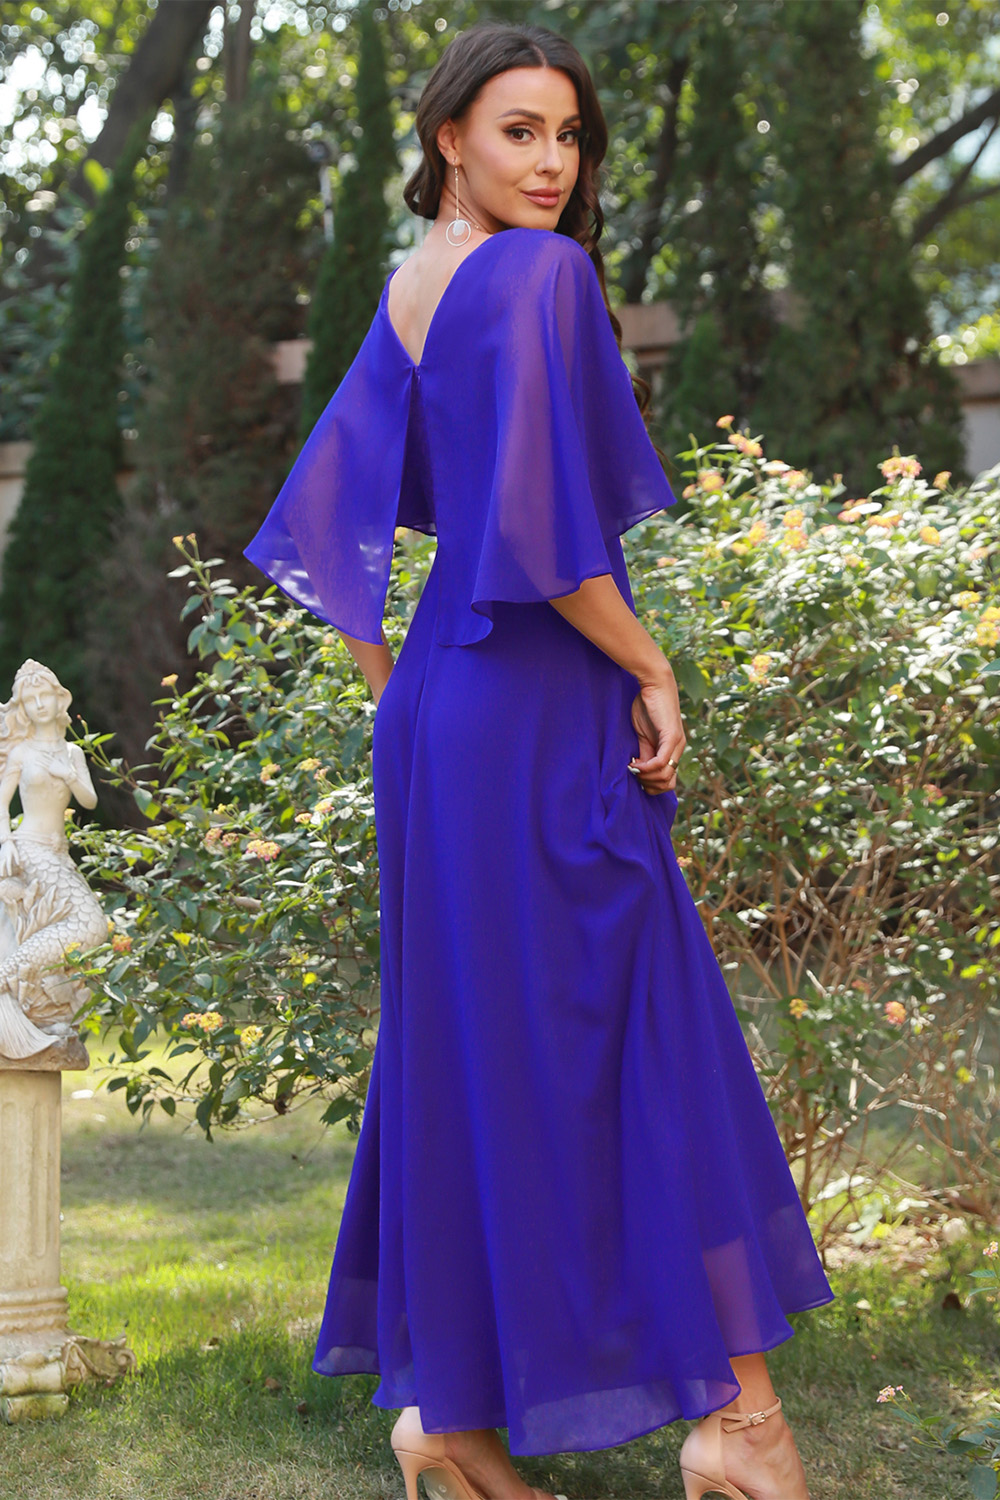 Elegant Royalblue V-Neck Chiffon Evening Gown for Formal Occasions